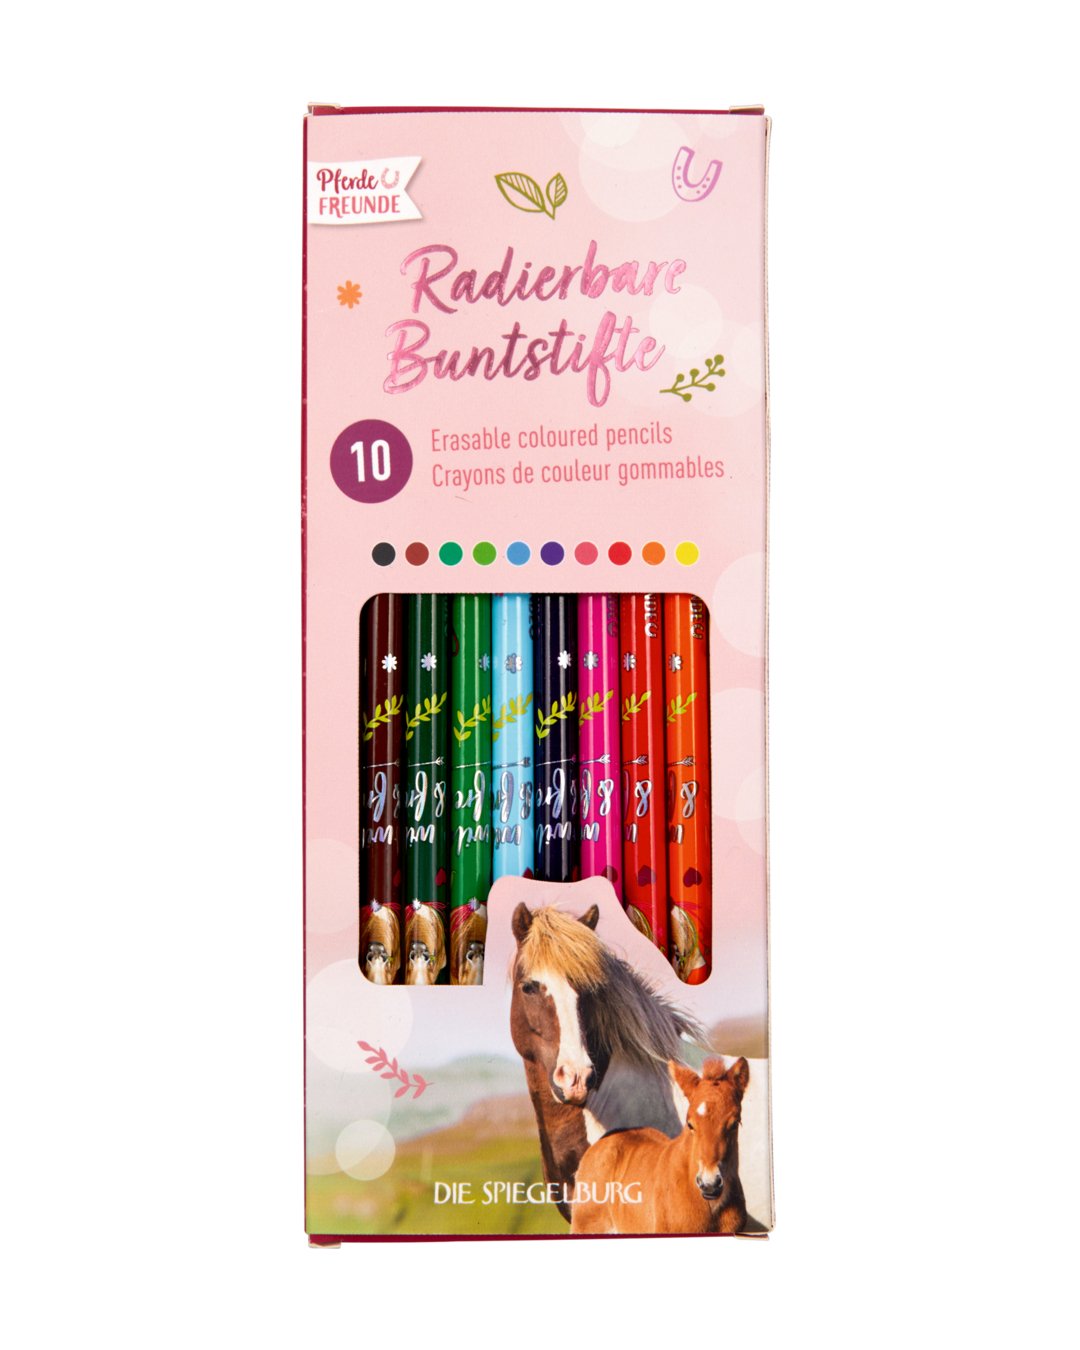 Radierbare Buntstifte - Pferdefreunde Standard Bunt